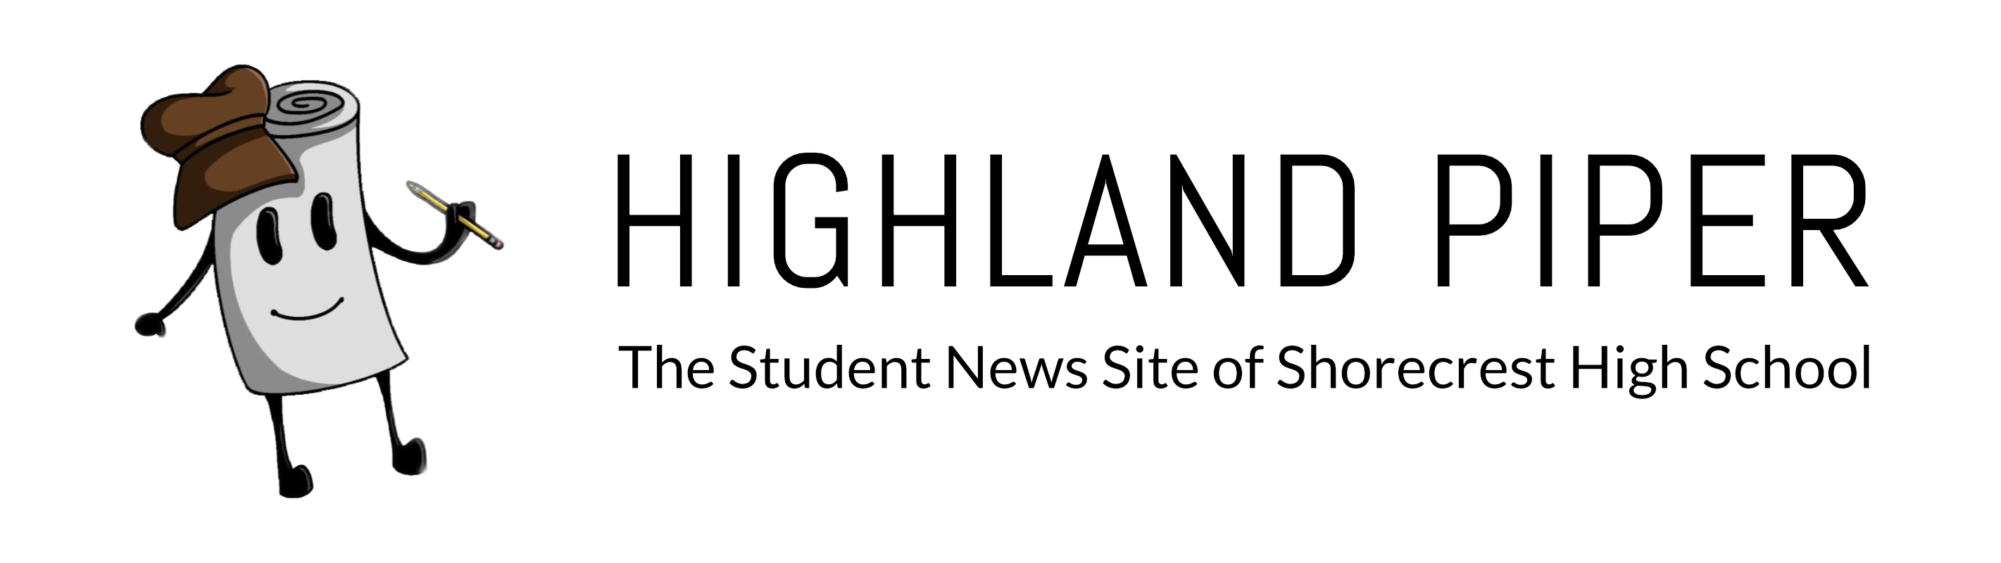 The Student News Site of Shorecrest High School